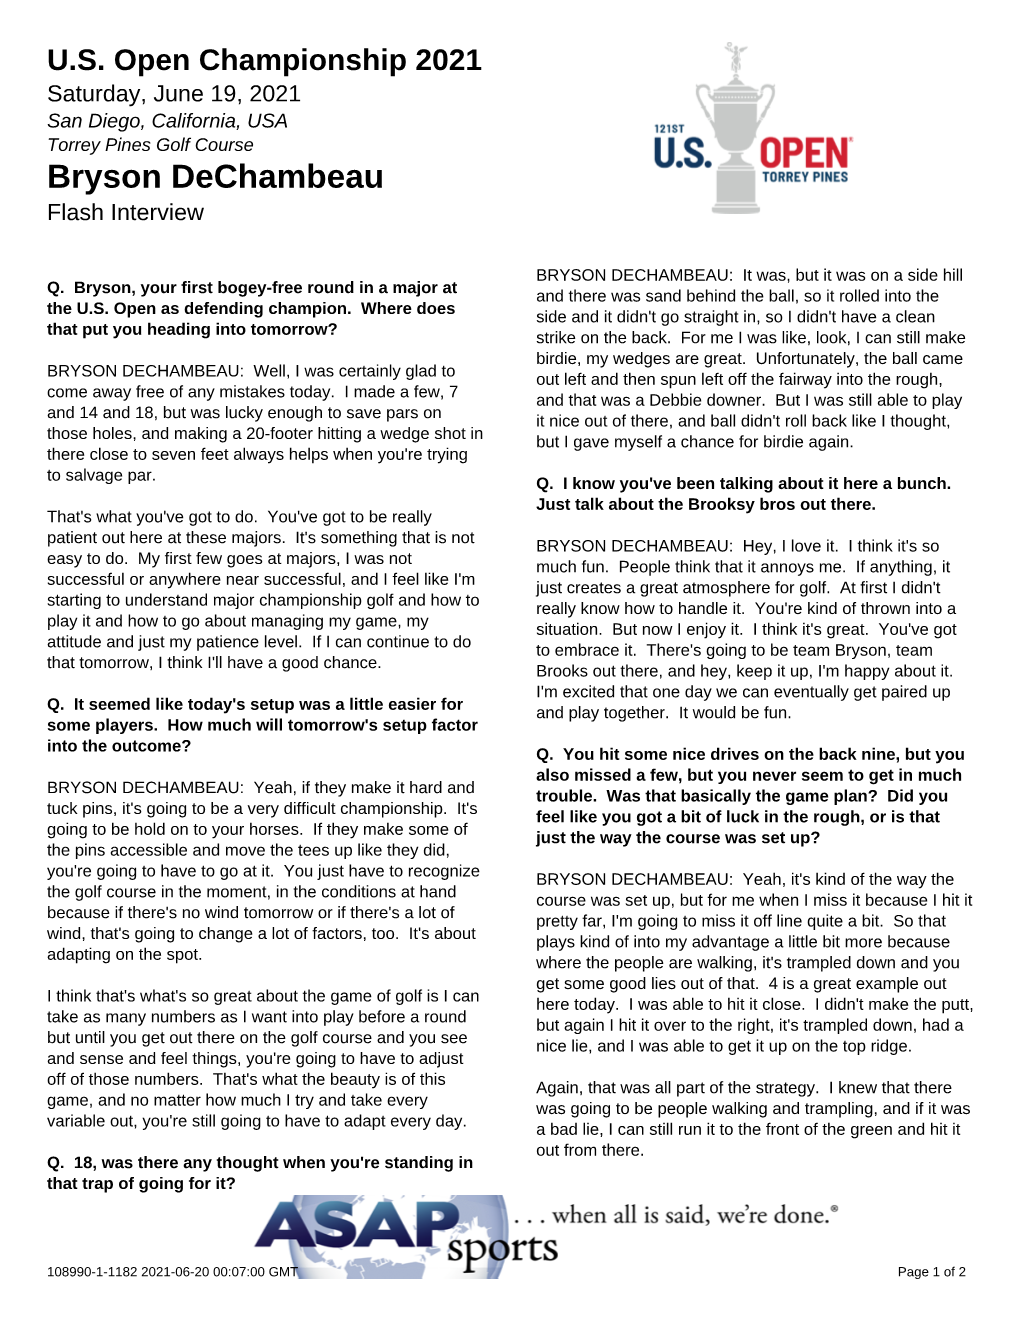 Bryson Dechambeau Flash Interview